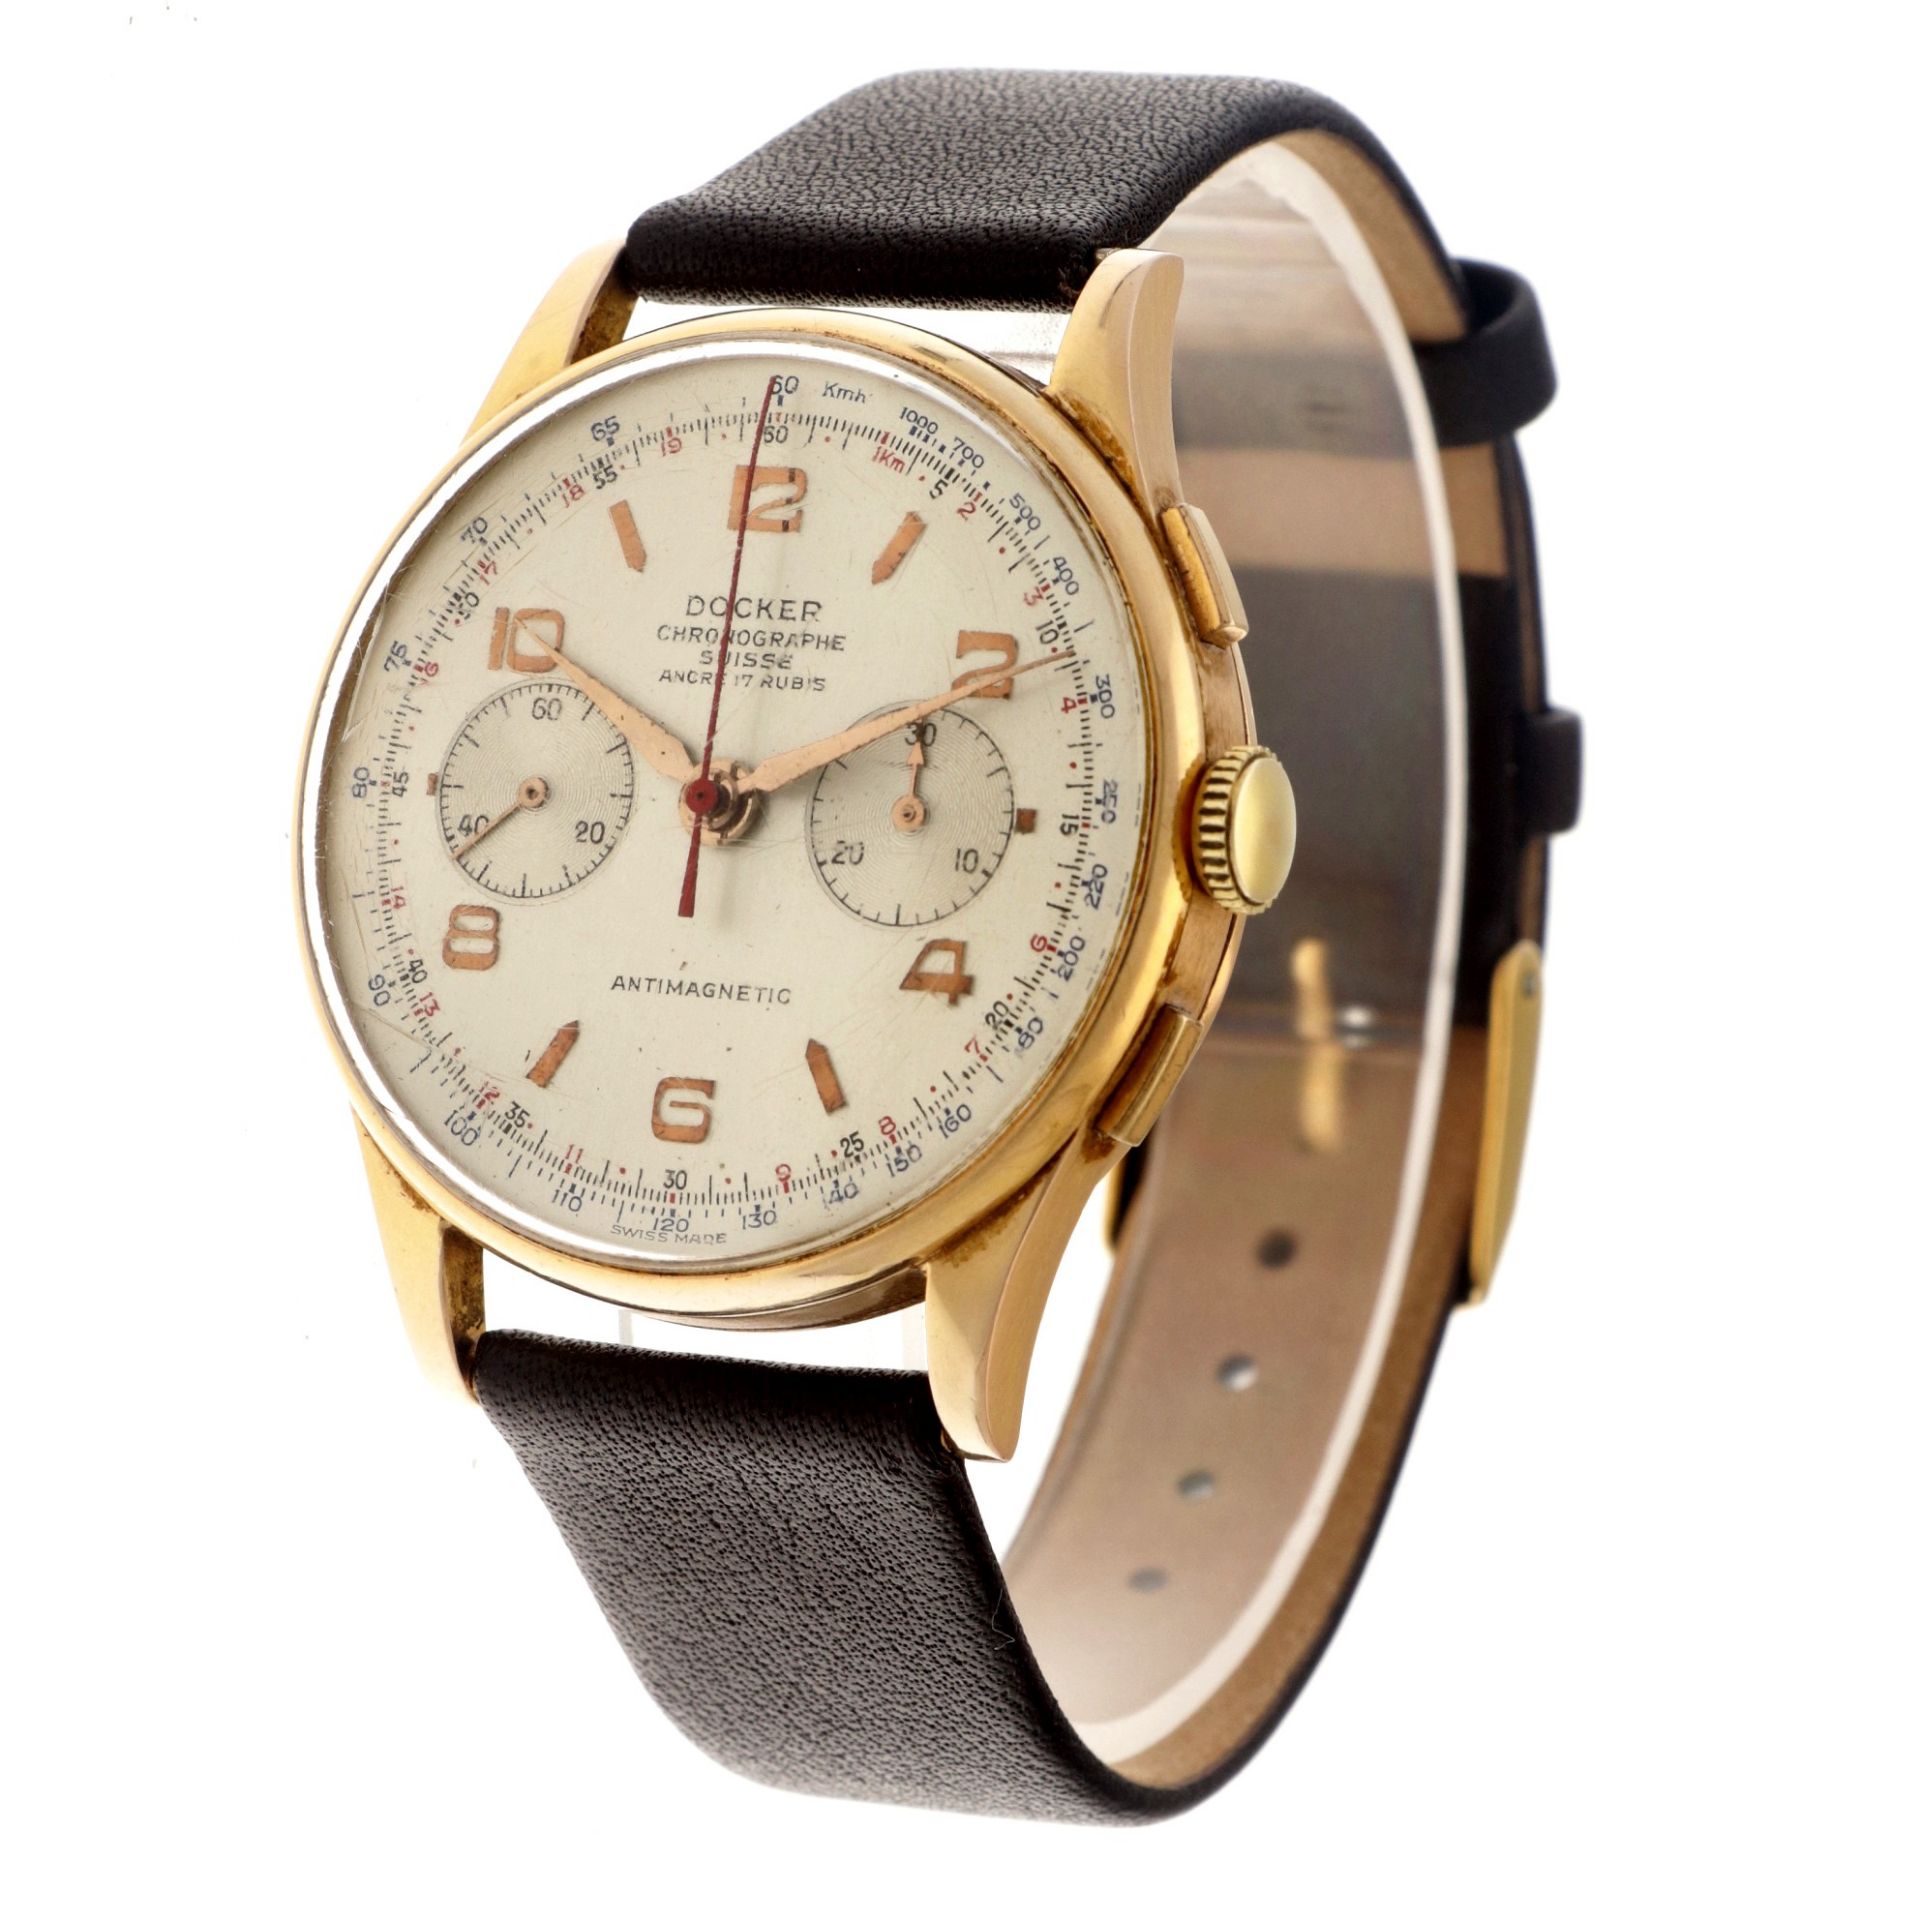 No Reserve - Docker Chronograph Suisse - Men's watch.  - Image 2 of 7